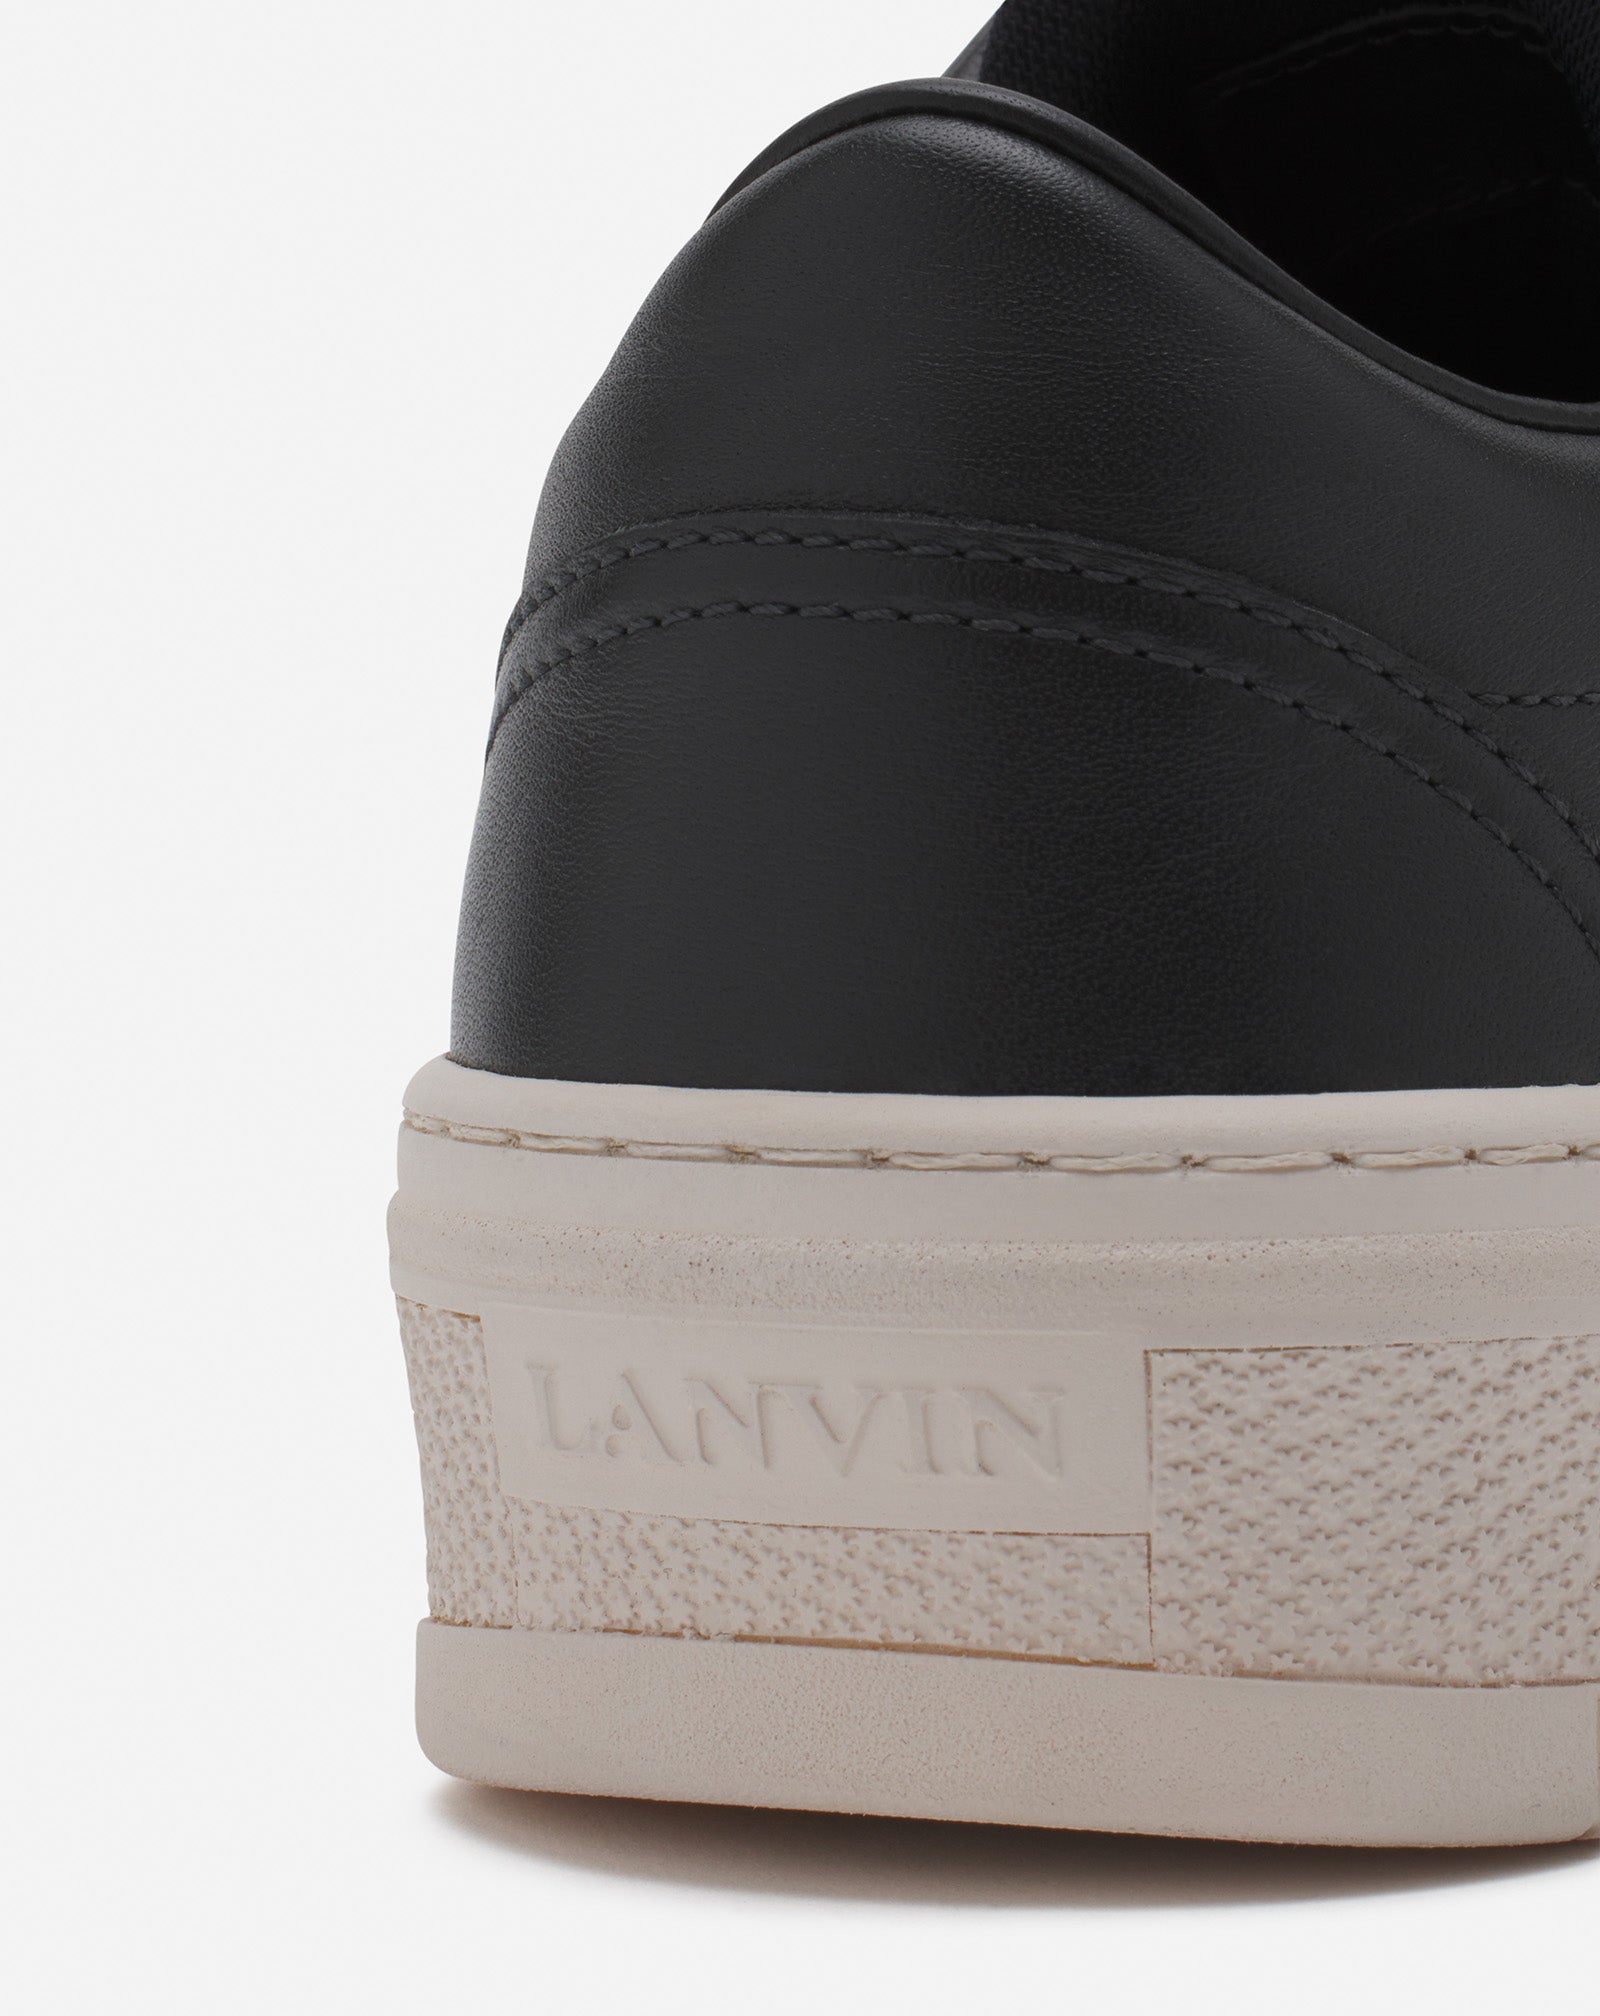 Lanvin x future leather cash sneakers for women